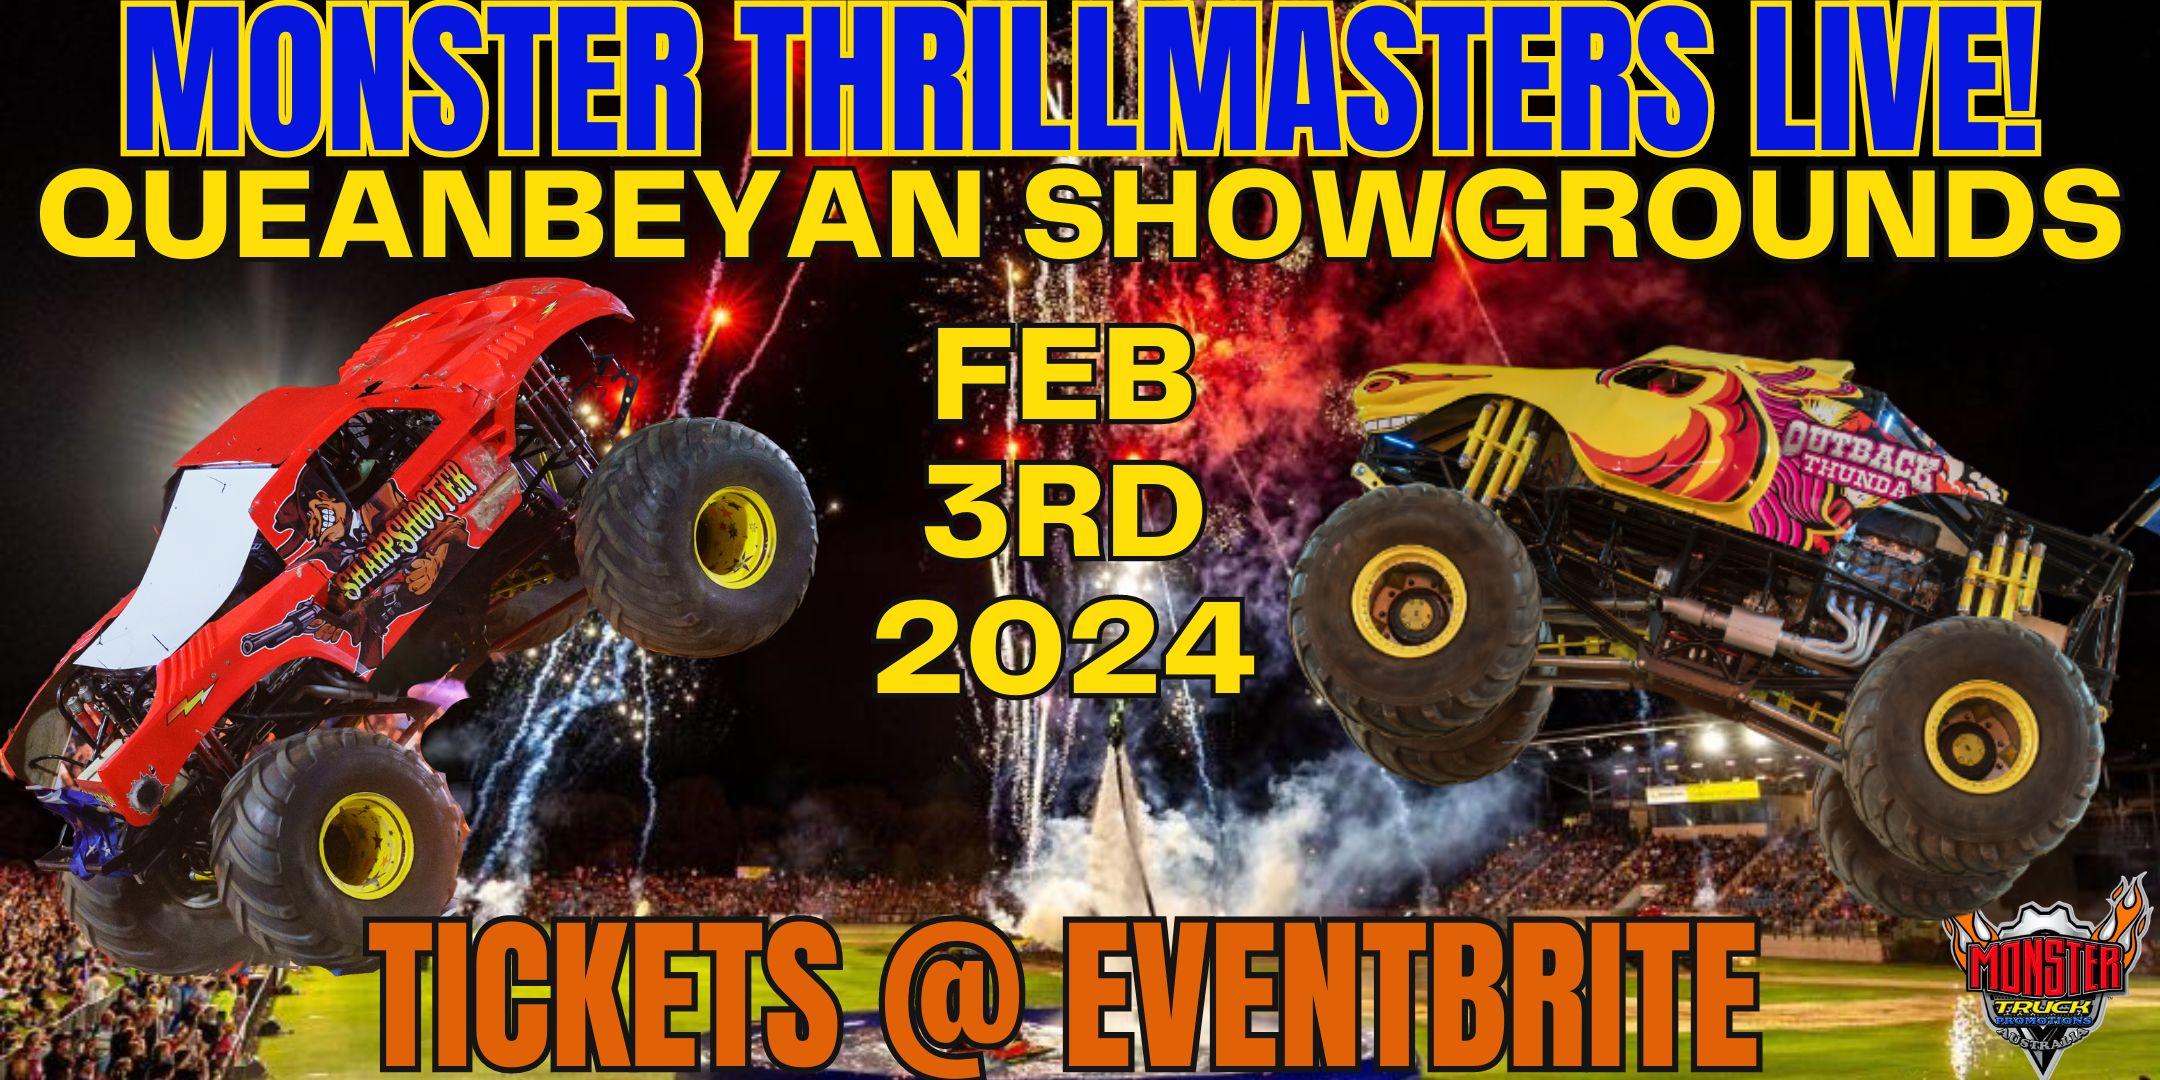 Monster Thrillmasters Live! Queanbeyan Showgrounds